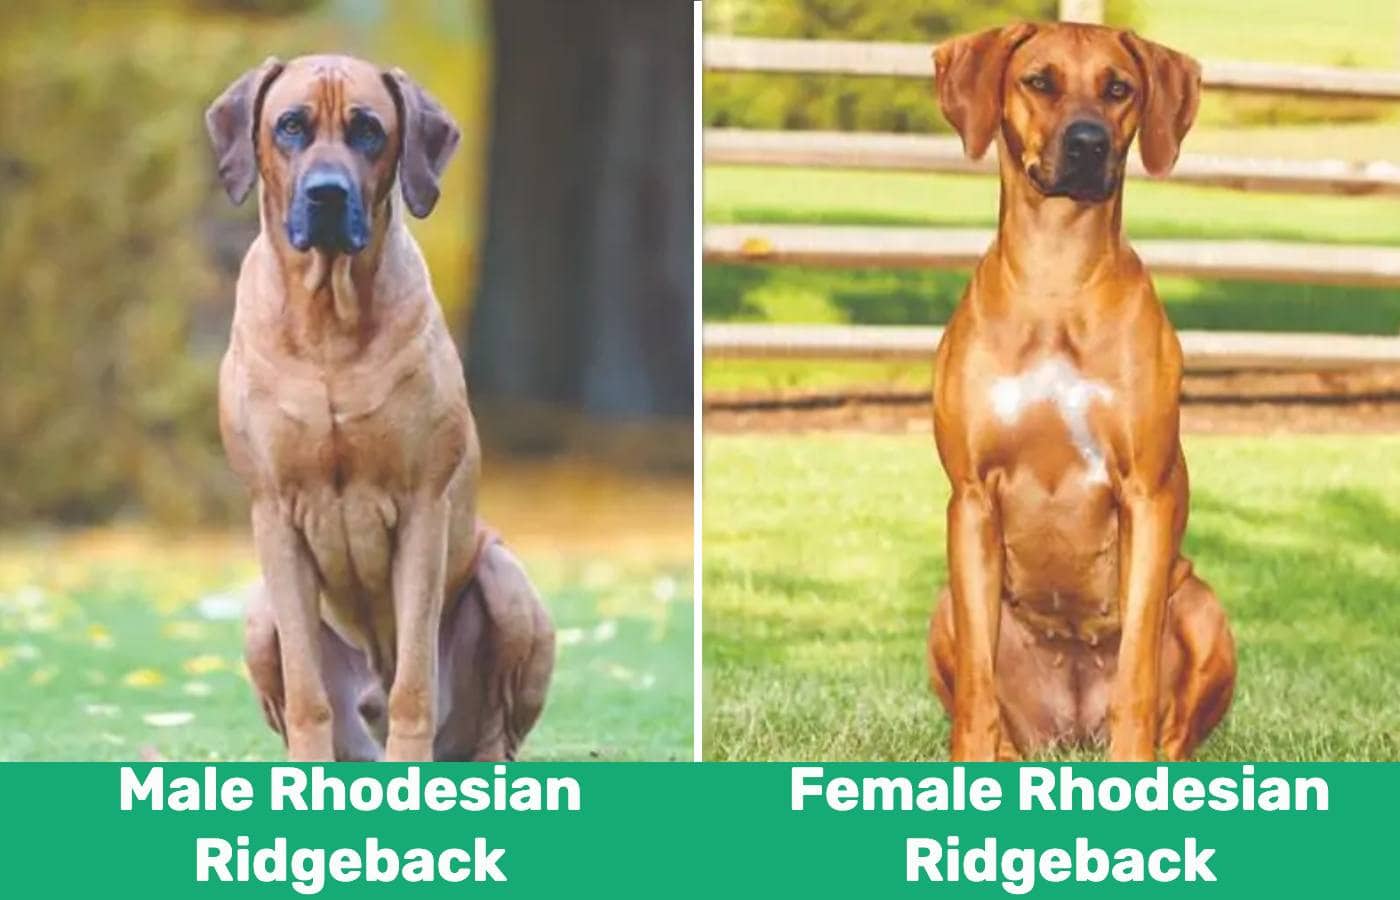 Male vs female Rhodesian Ridgeback